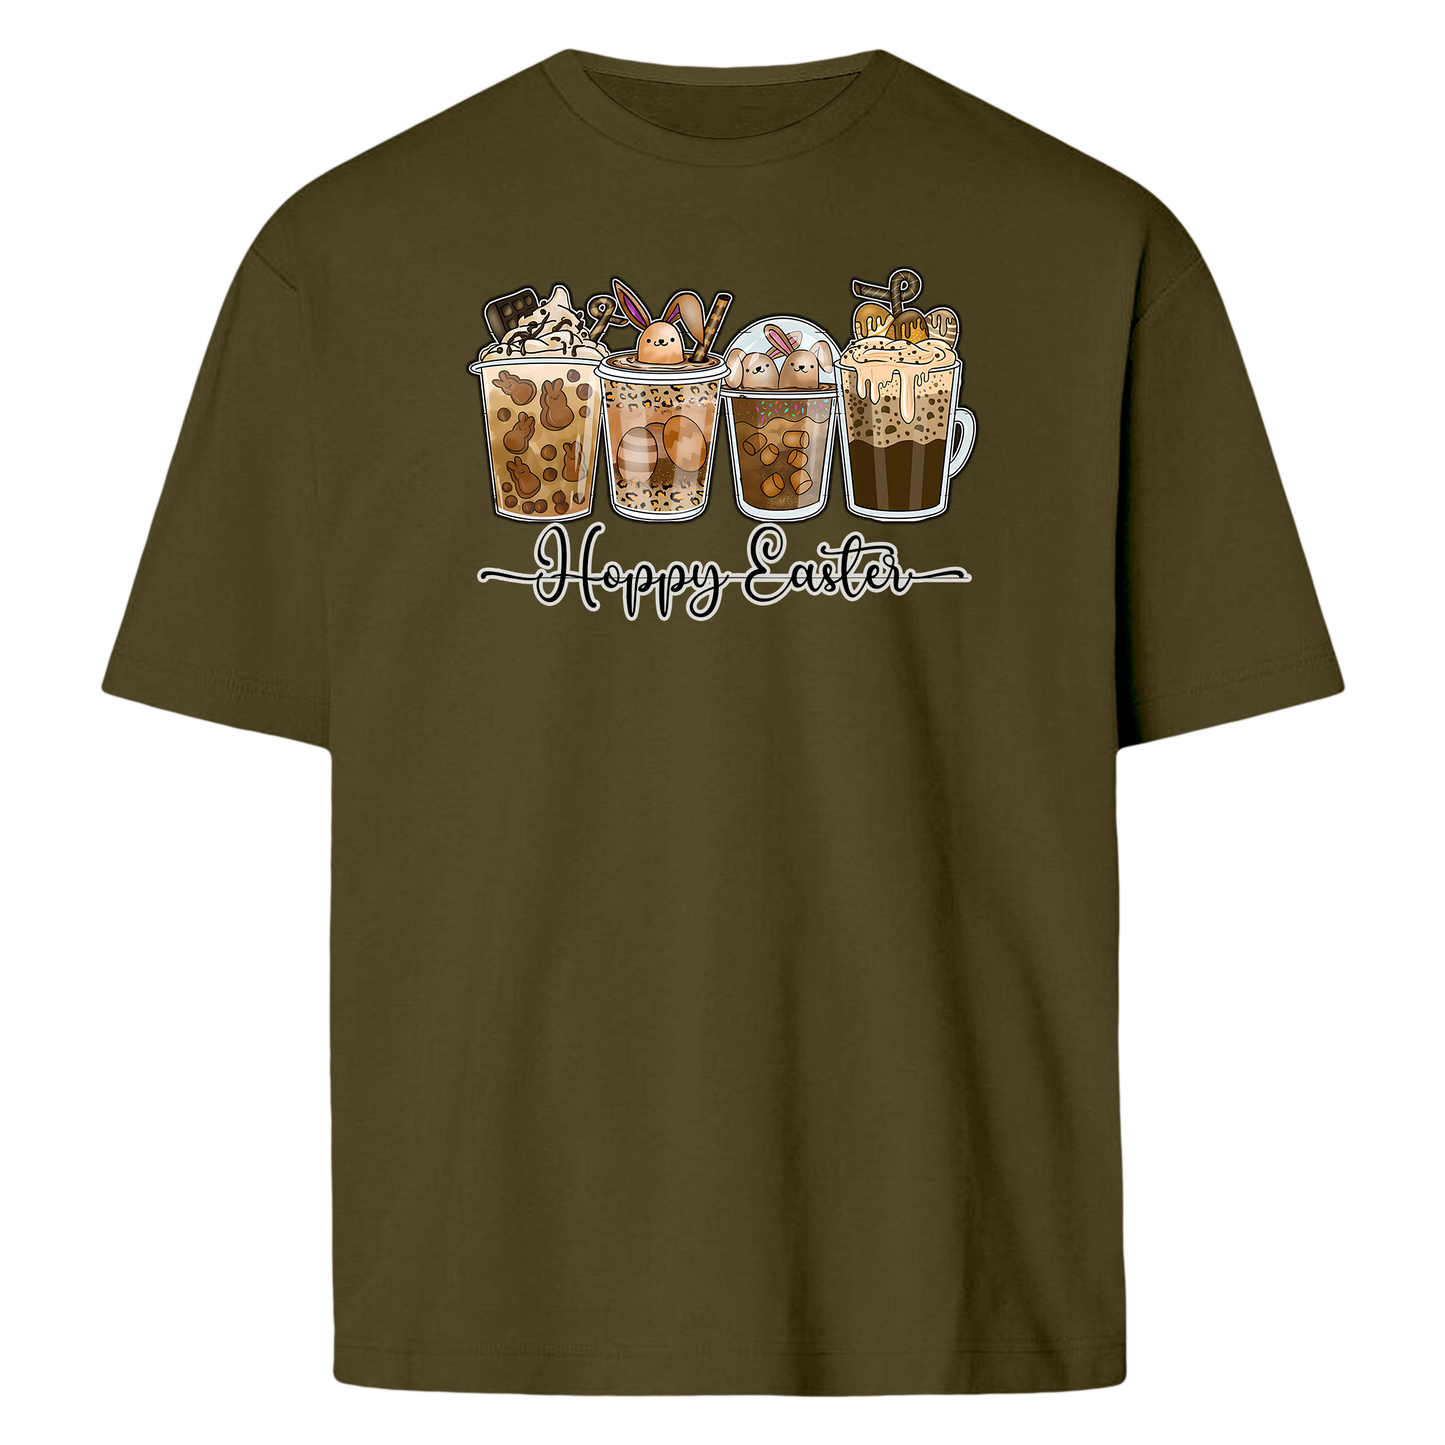 Coffee - T-shirt